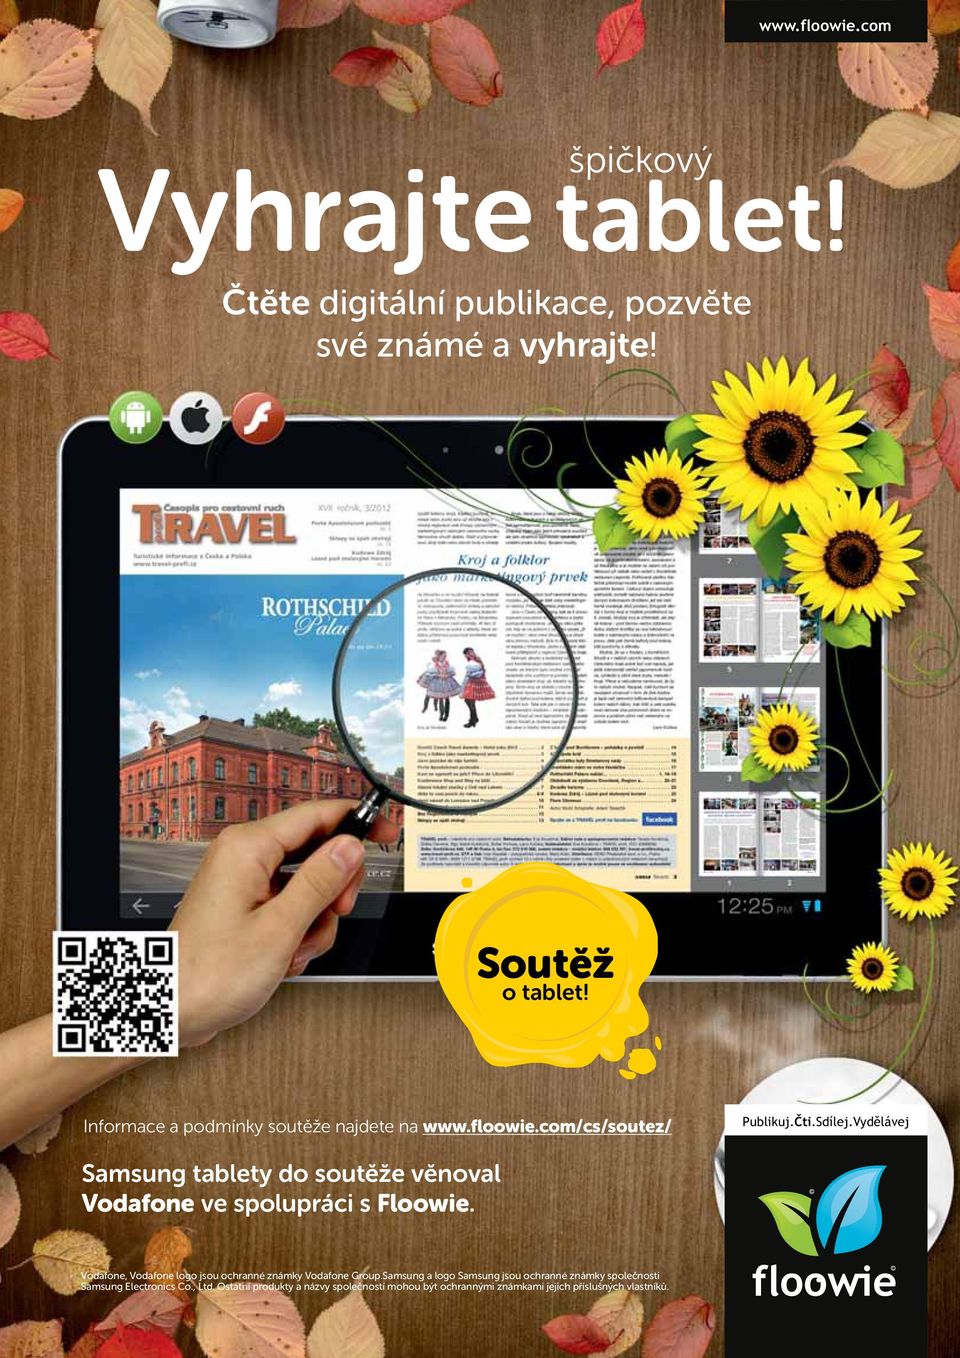 Vydělávej Samsung tablety do soutěže věnoval Vodafone ve spolupráci s Floowie.